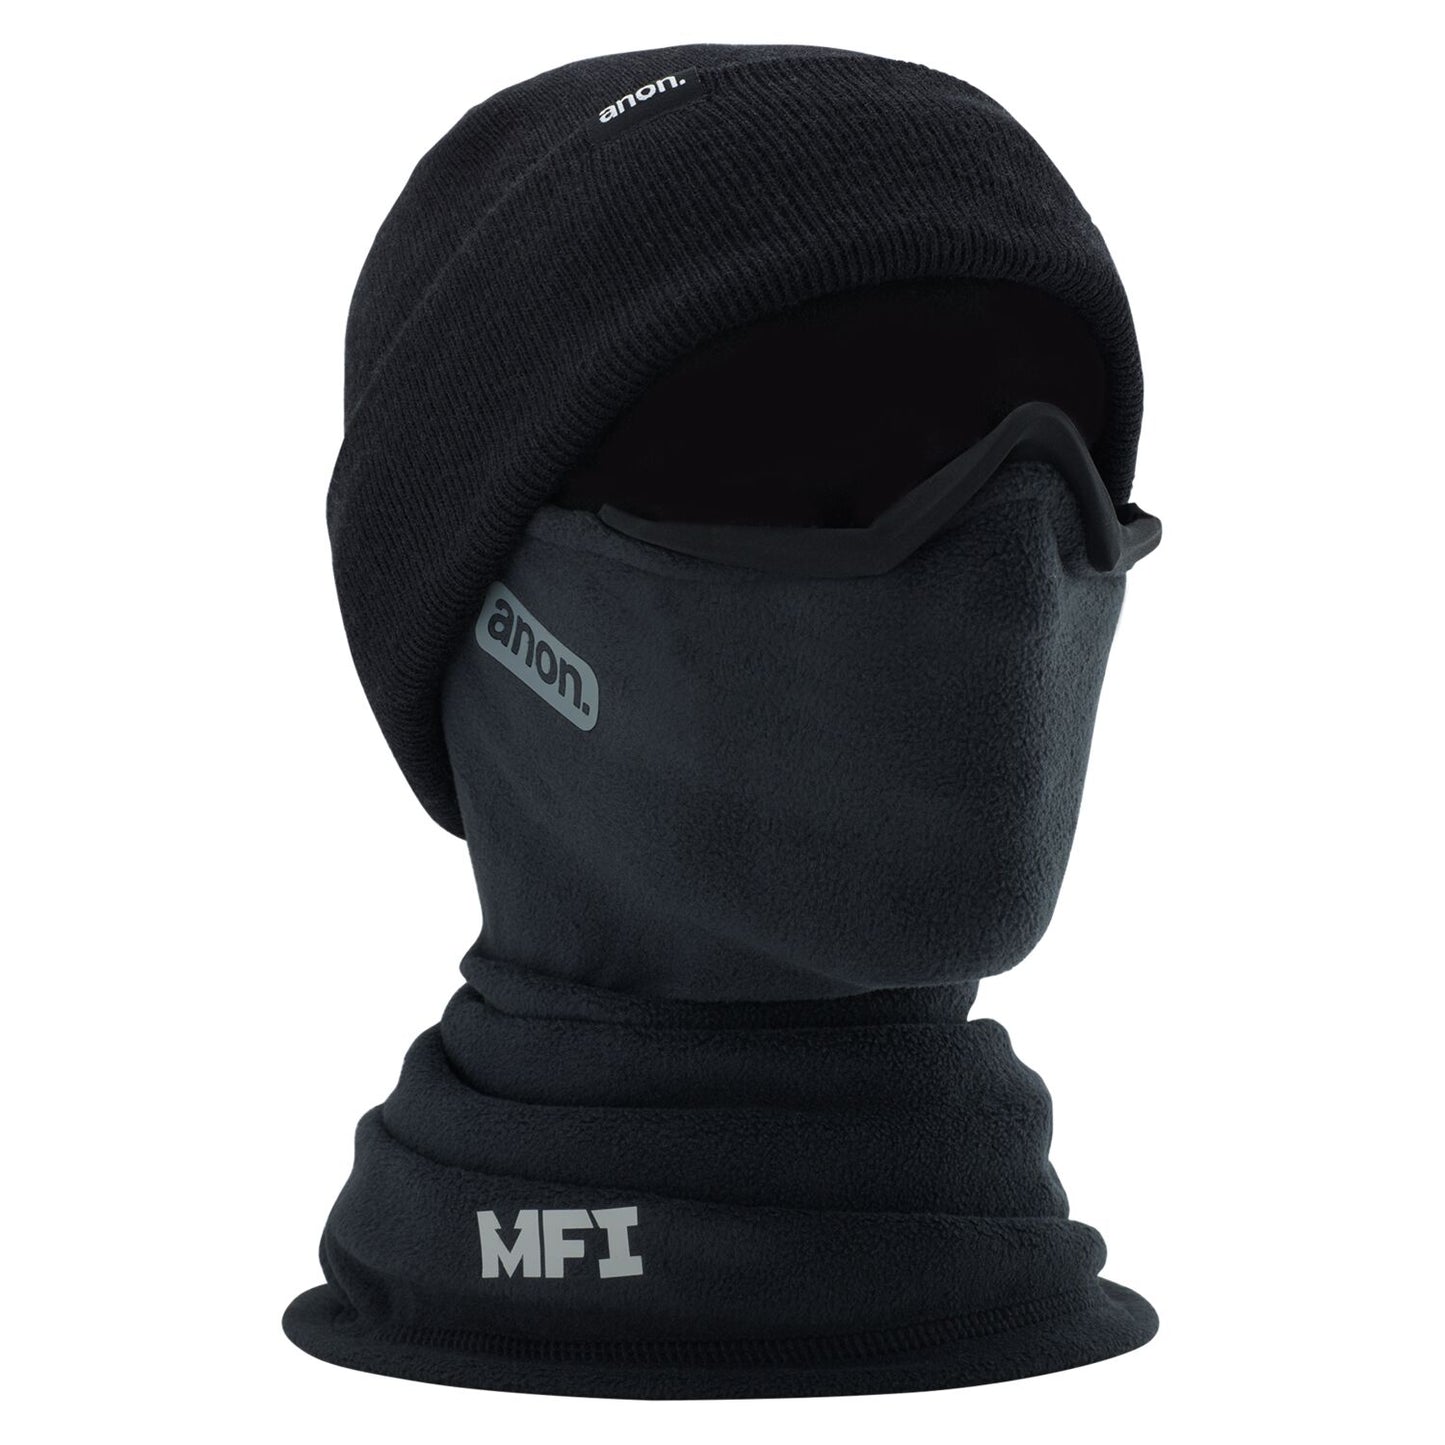 Anon MFI Beanie Neck Warmer Black OS Neck Warmers & Face Masks